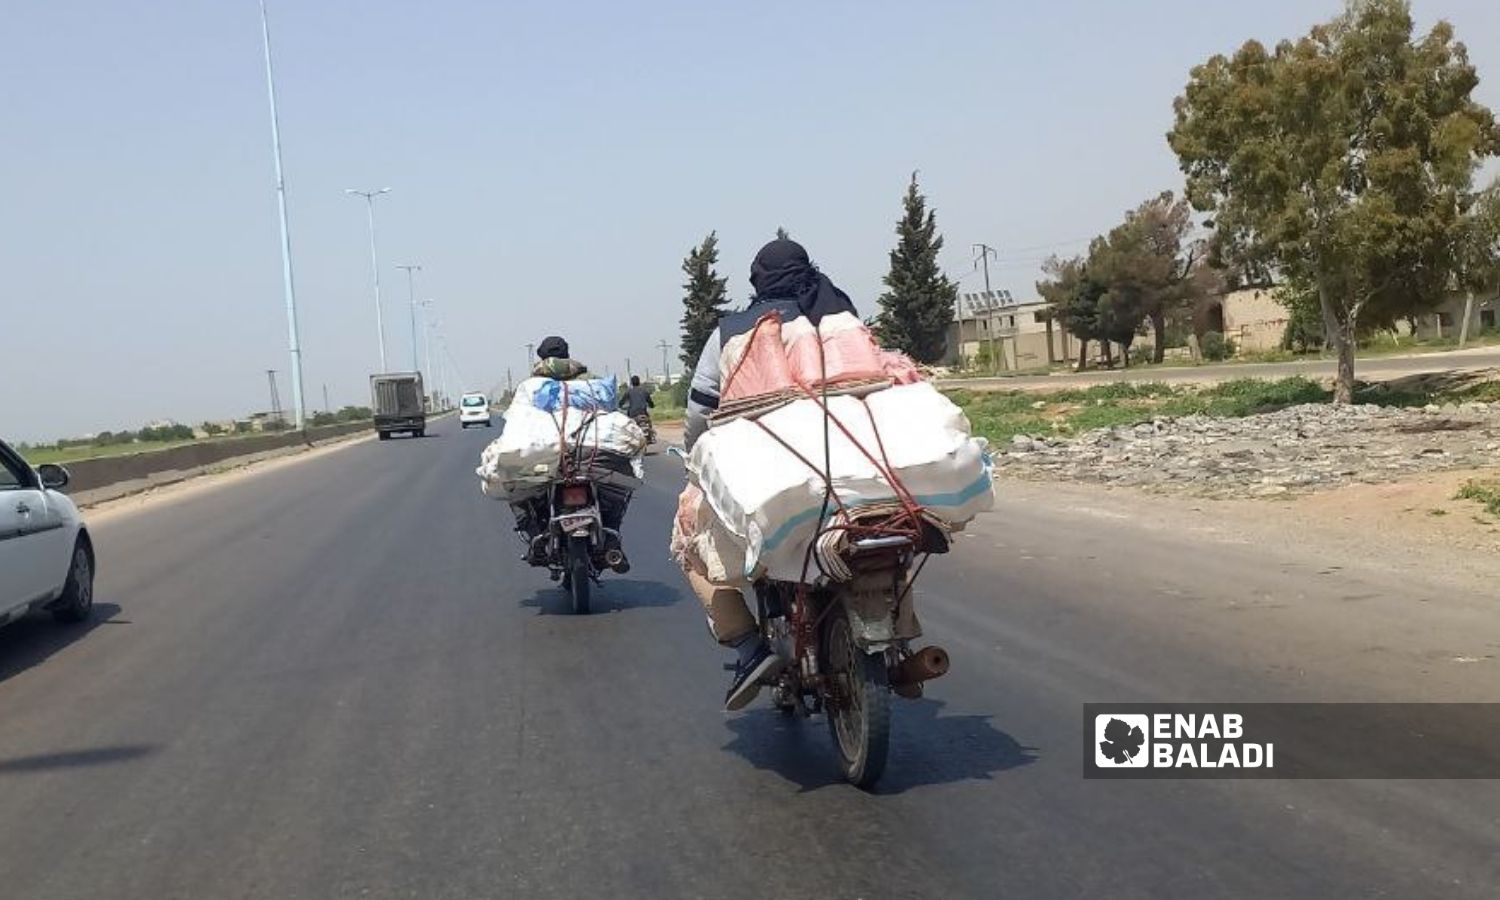 Smuggling by motorcycles in central Homs governorate - August 2022 (Enab Baladi/Orwah al-Mundhir)